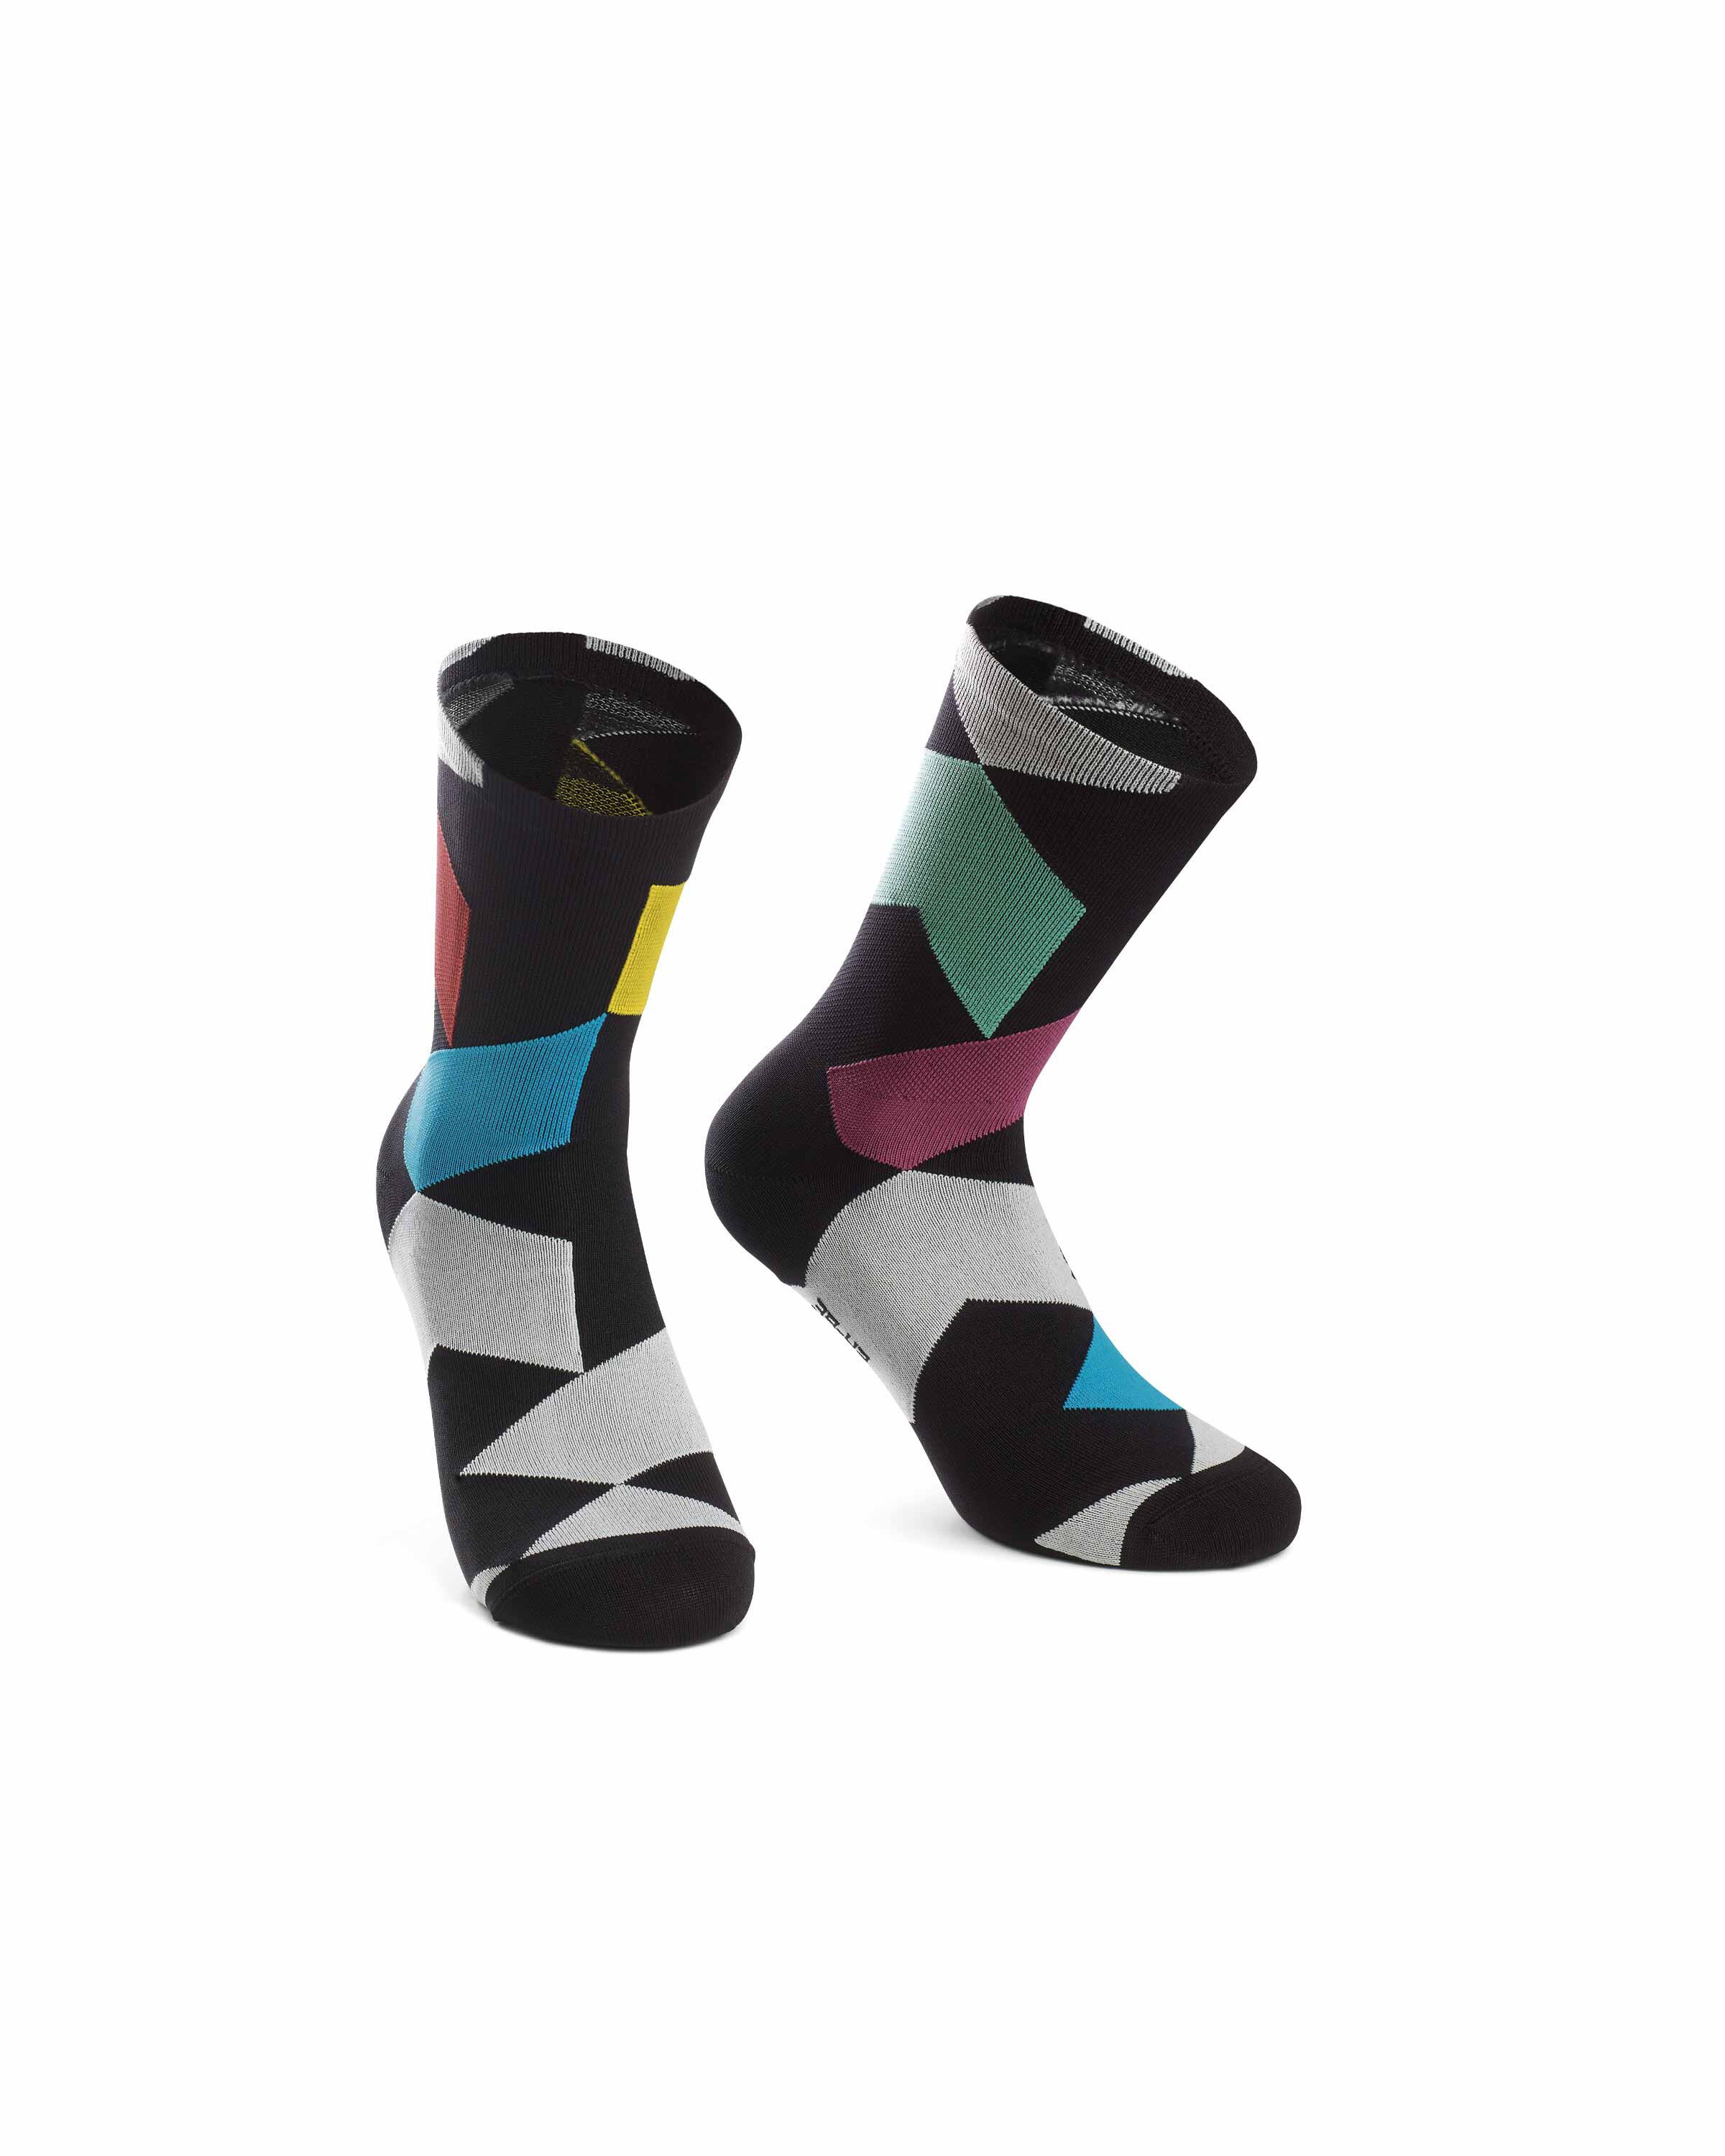 Assos Fastlane Rock Socks - Cycling socks